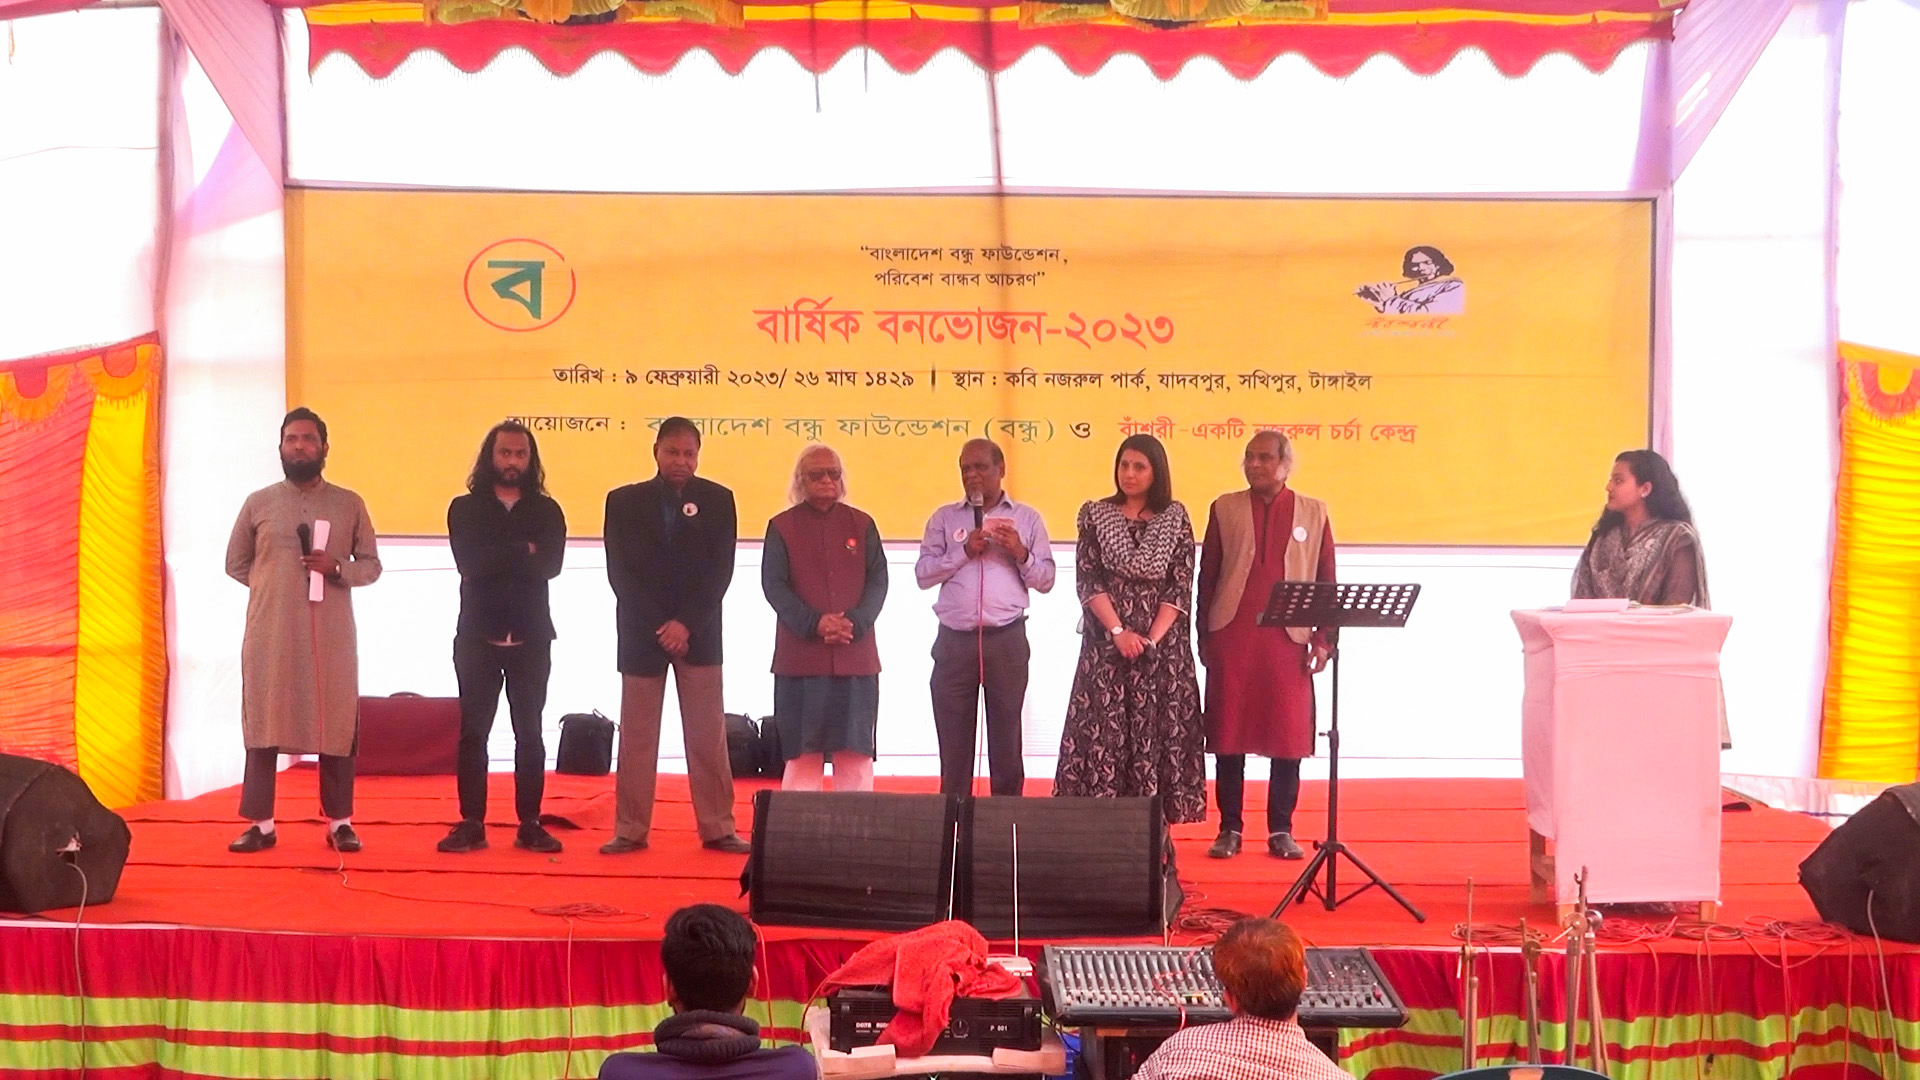 Annual Picnic-2023 of BONDHU and Bashori held at Jadavpur - Bangladesh Bondhu Foundation (BONDHU)